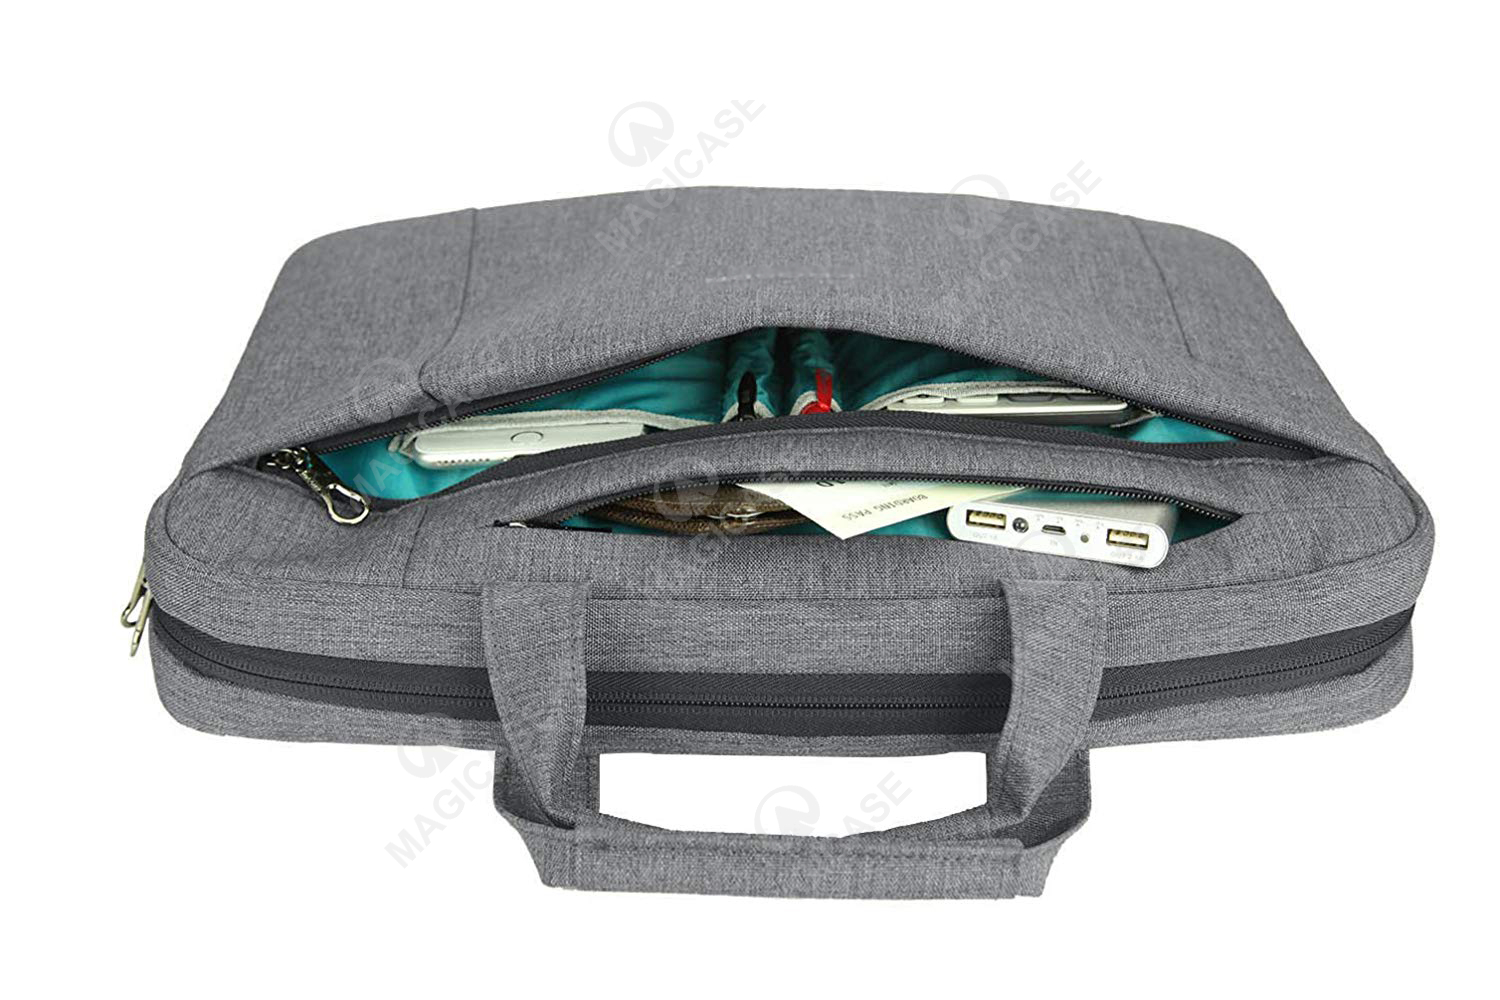 Briefcase Shoulder Bag Water Repellent Laptop grey